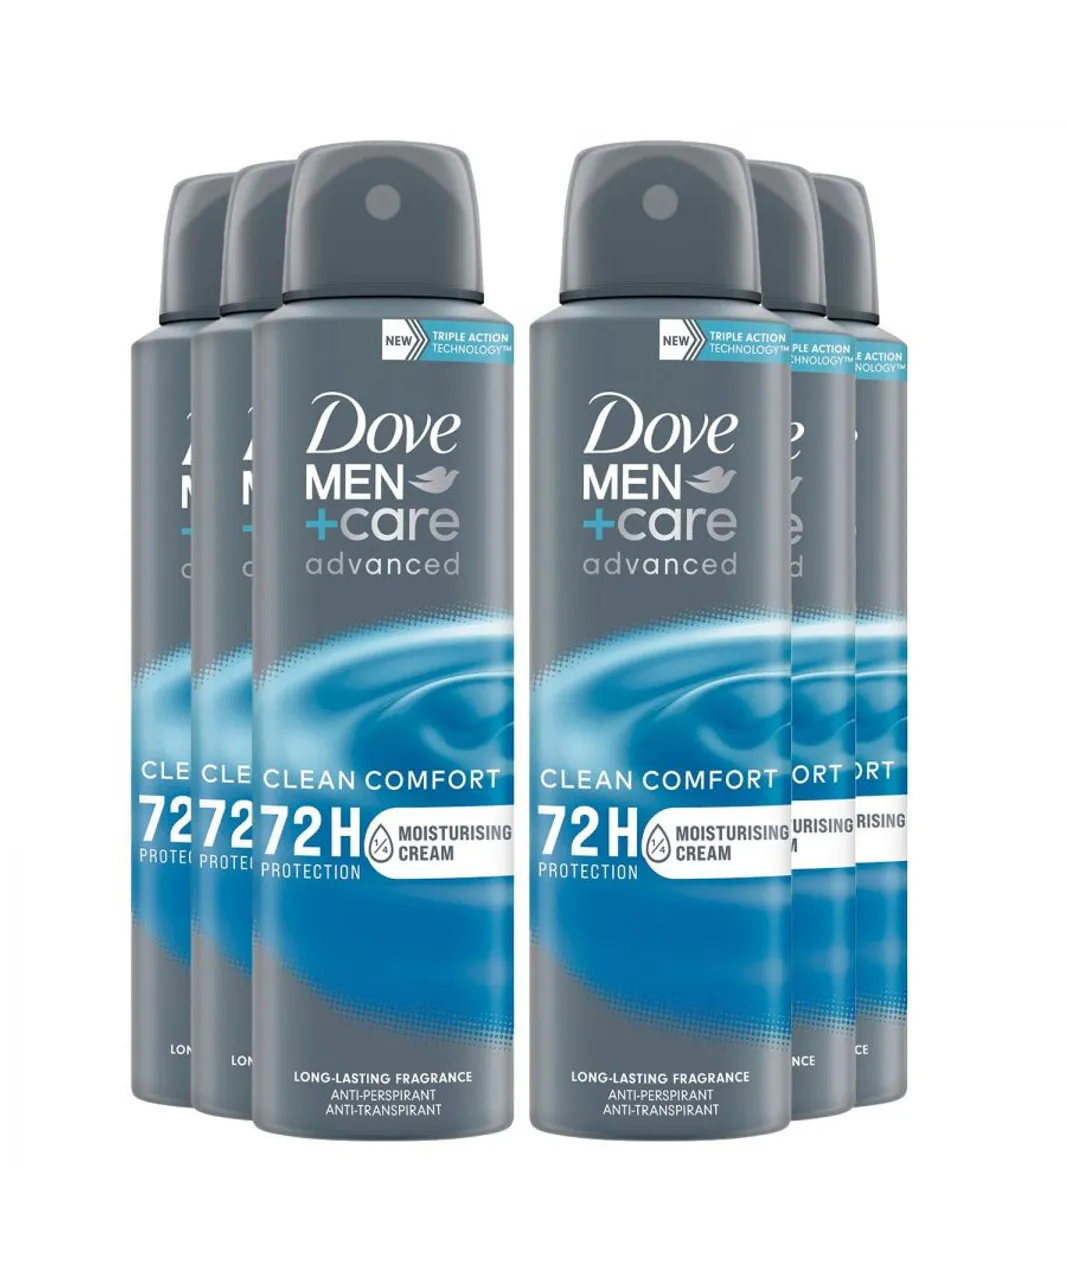 Dove Mens Men+Care Antiperspirant Deodorant 72H Protection, Clean Comfort 150 ml, 6 Pack - One Size